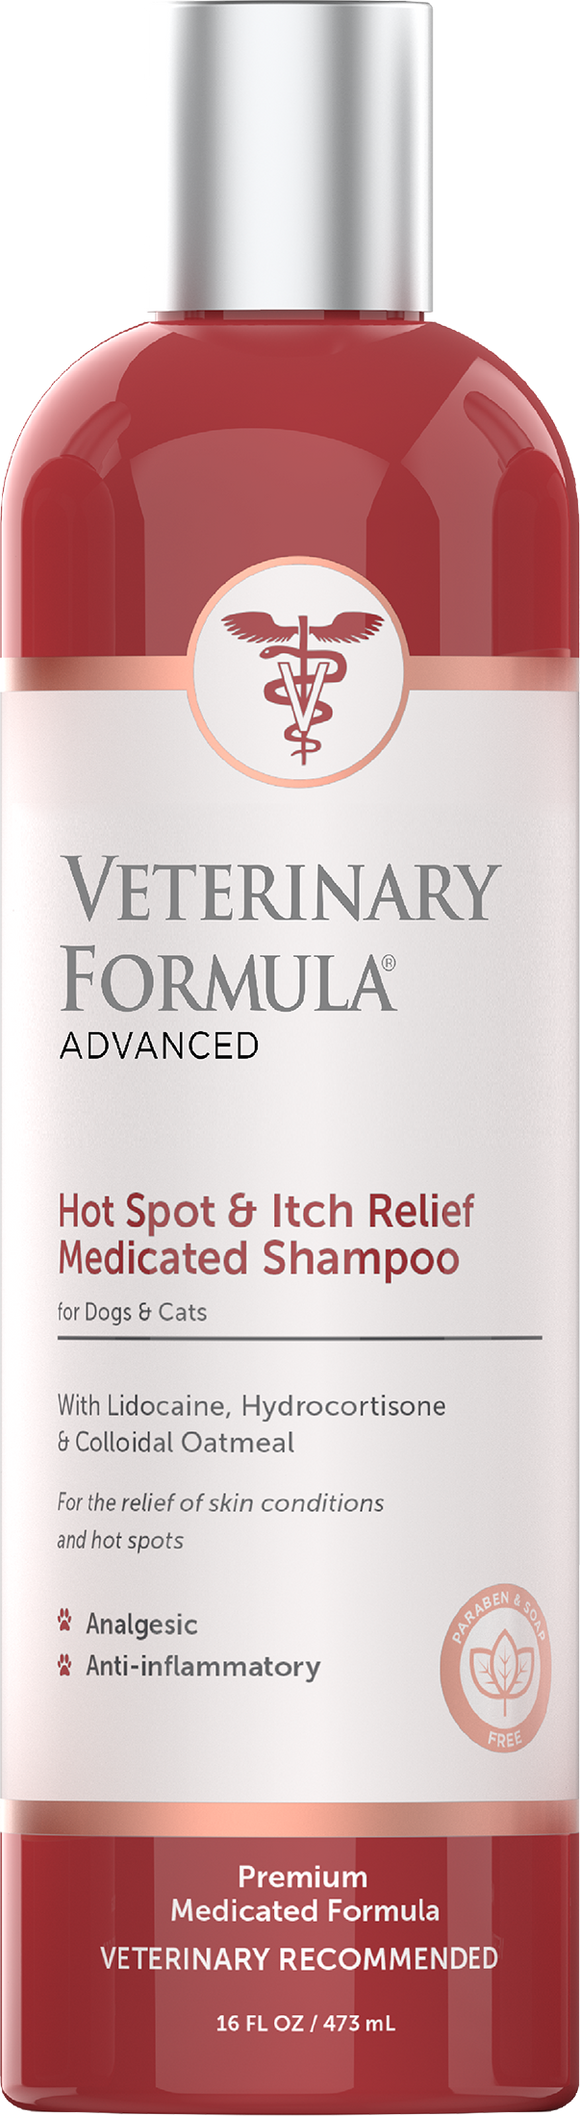 Veterinary Formula Hot Spot & Itch Relief Medicated Shampoo